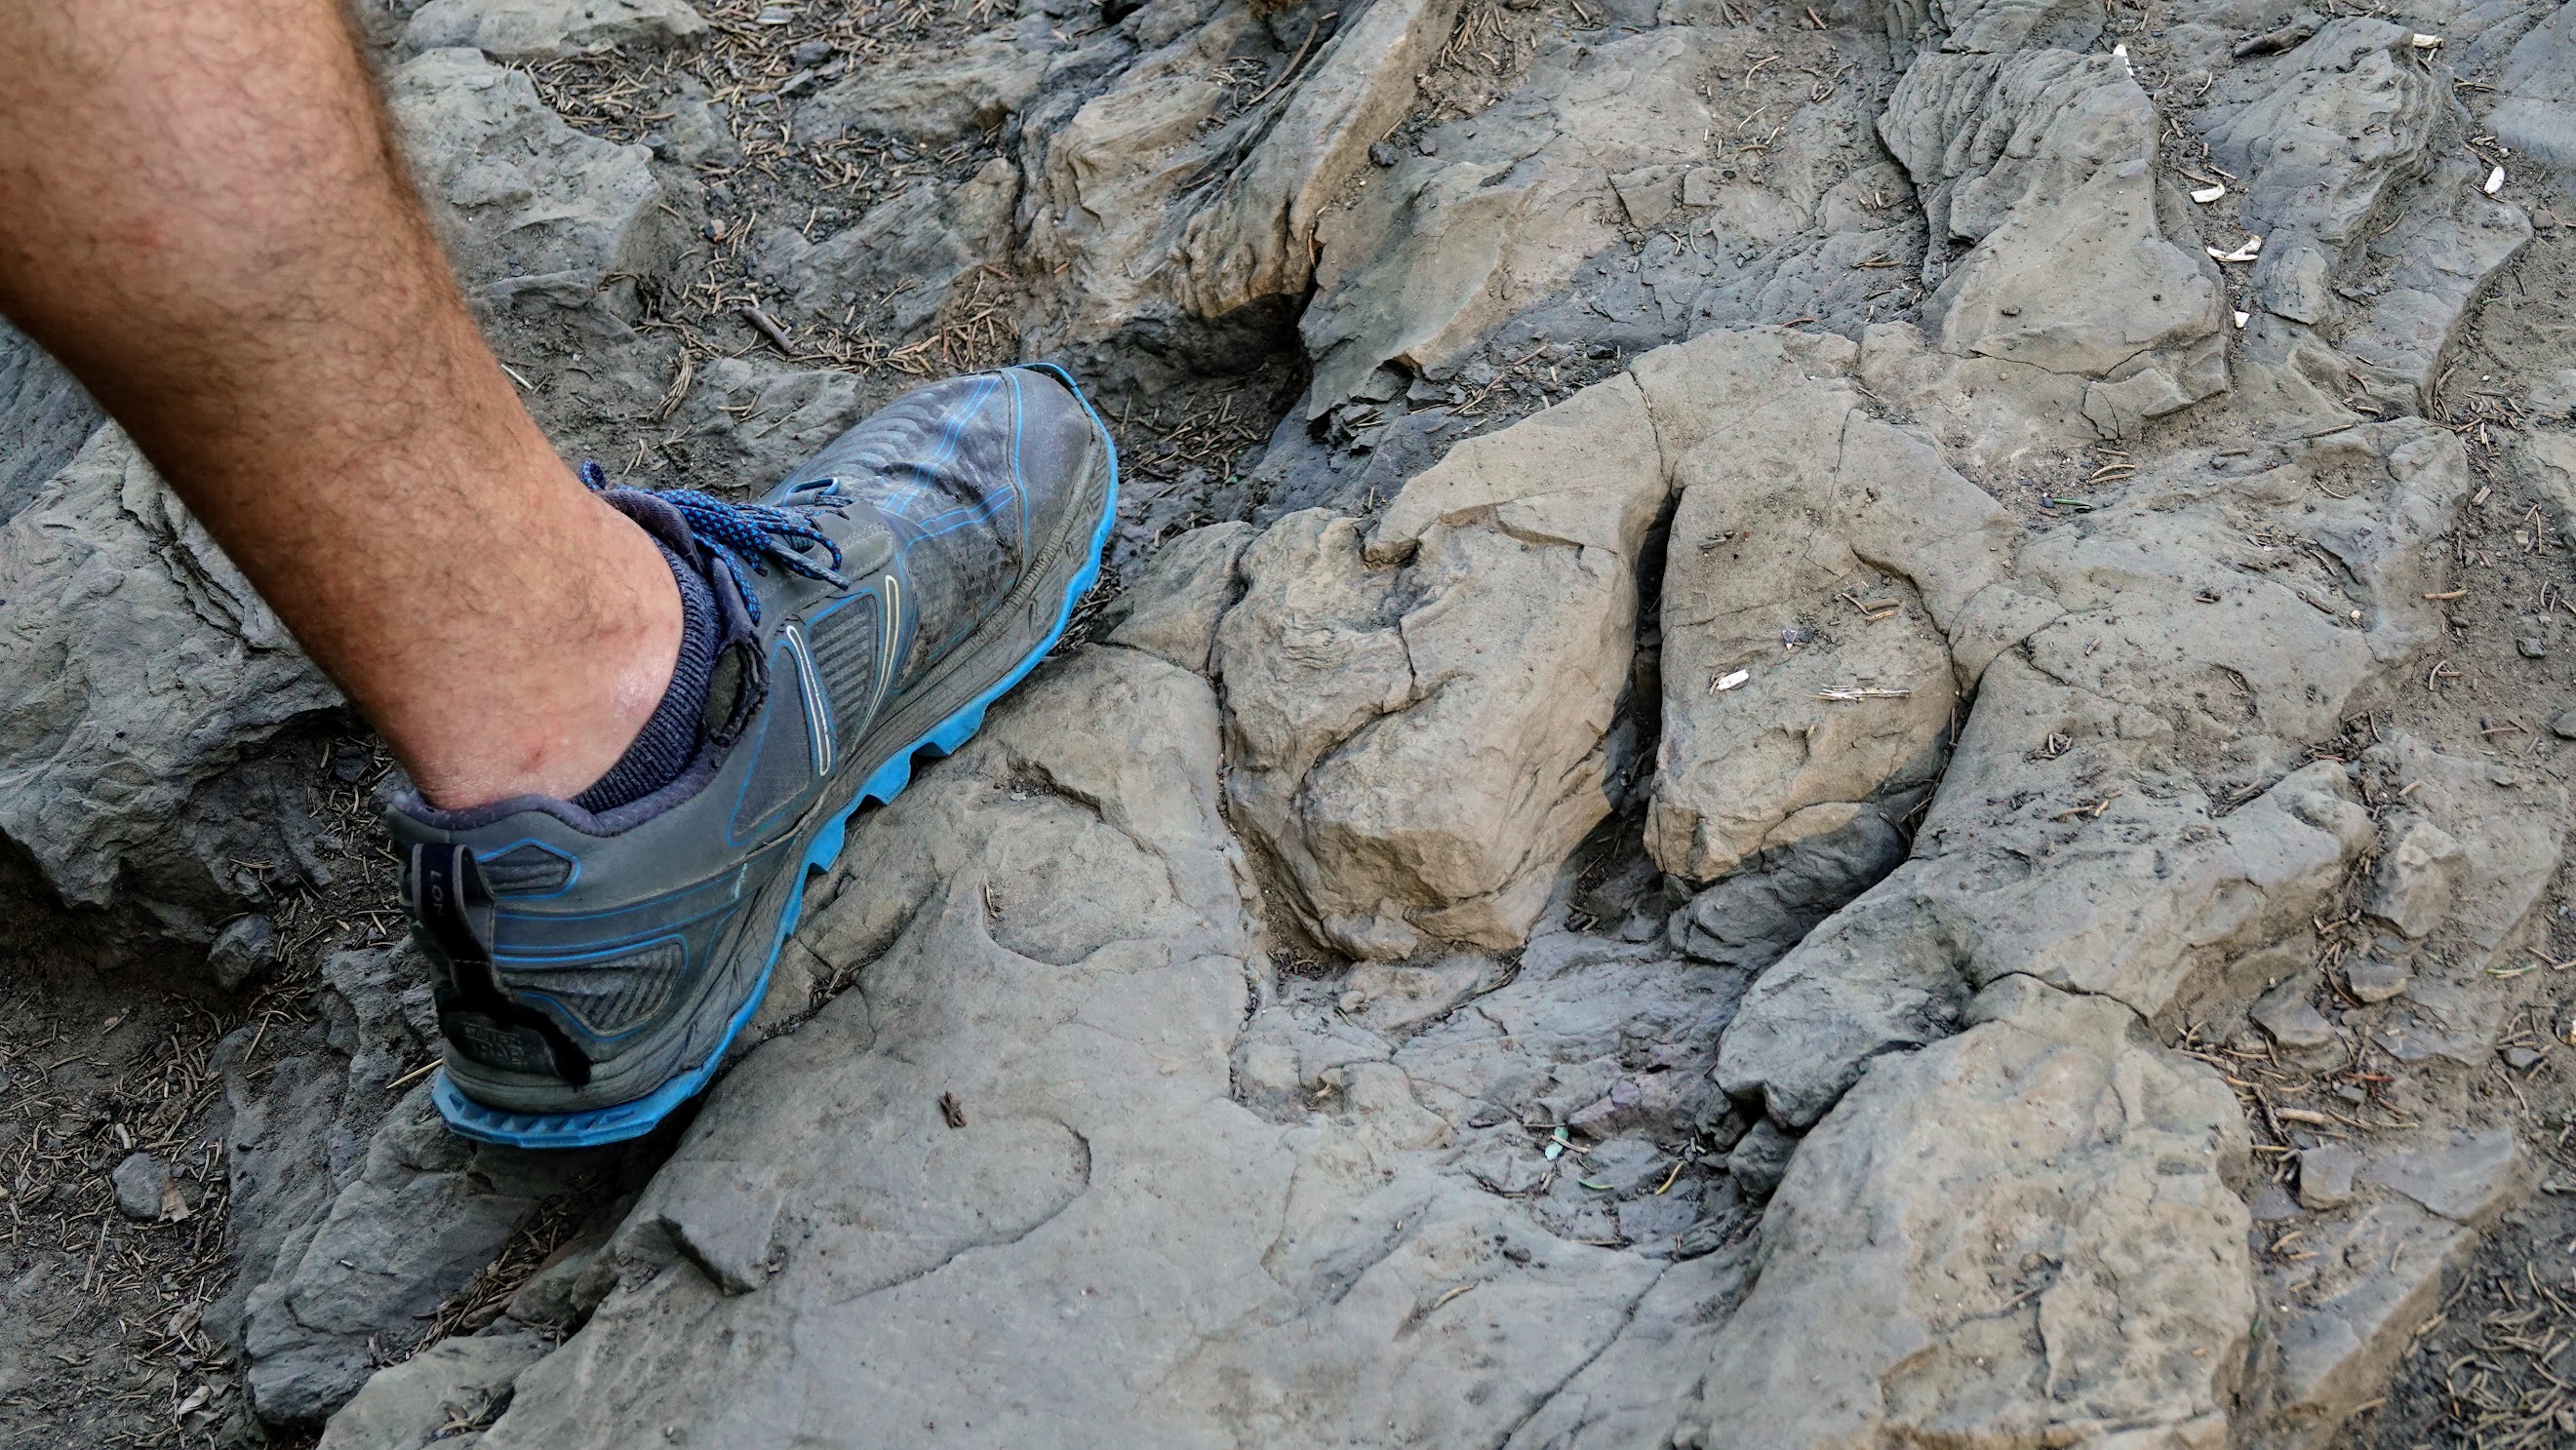 Dinosaur Footprint in Mudstone